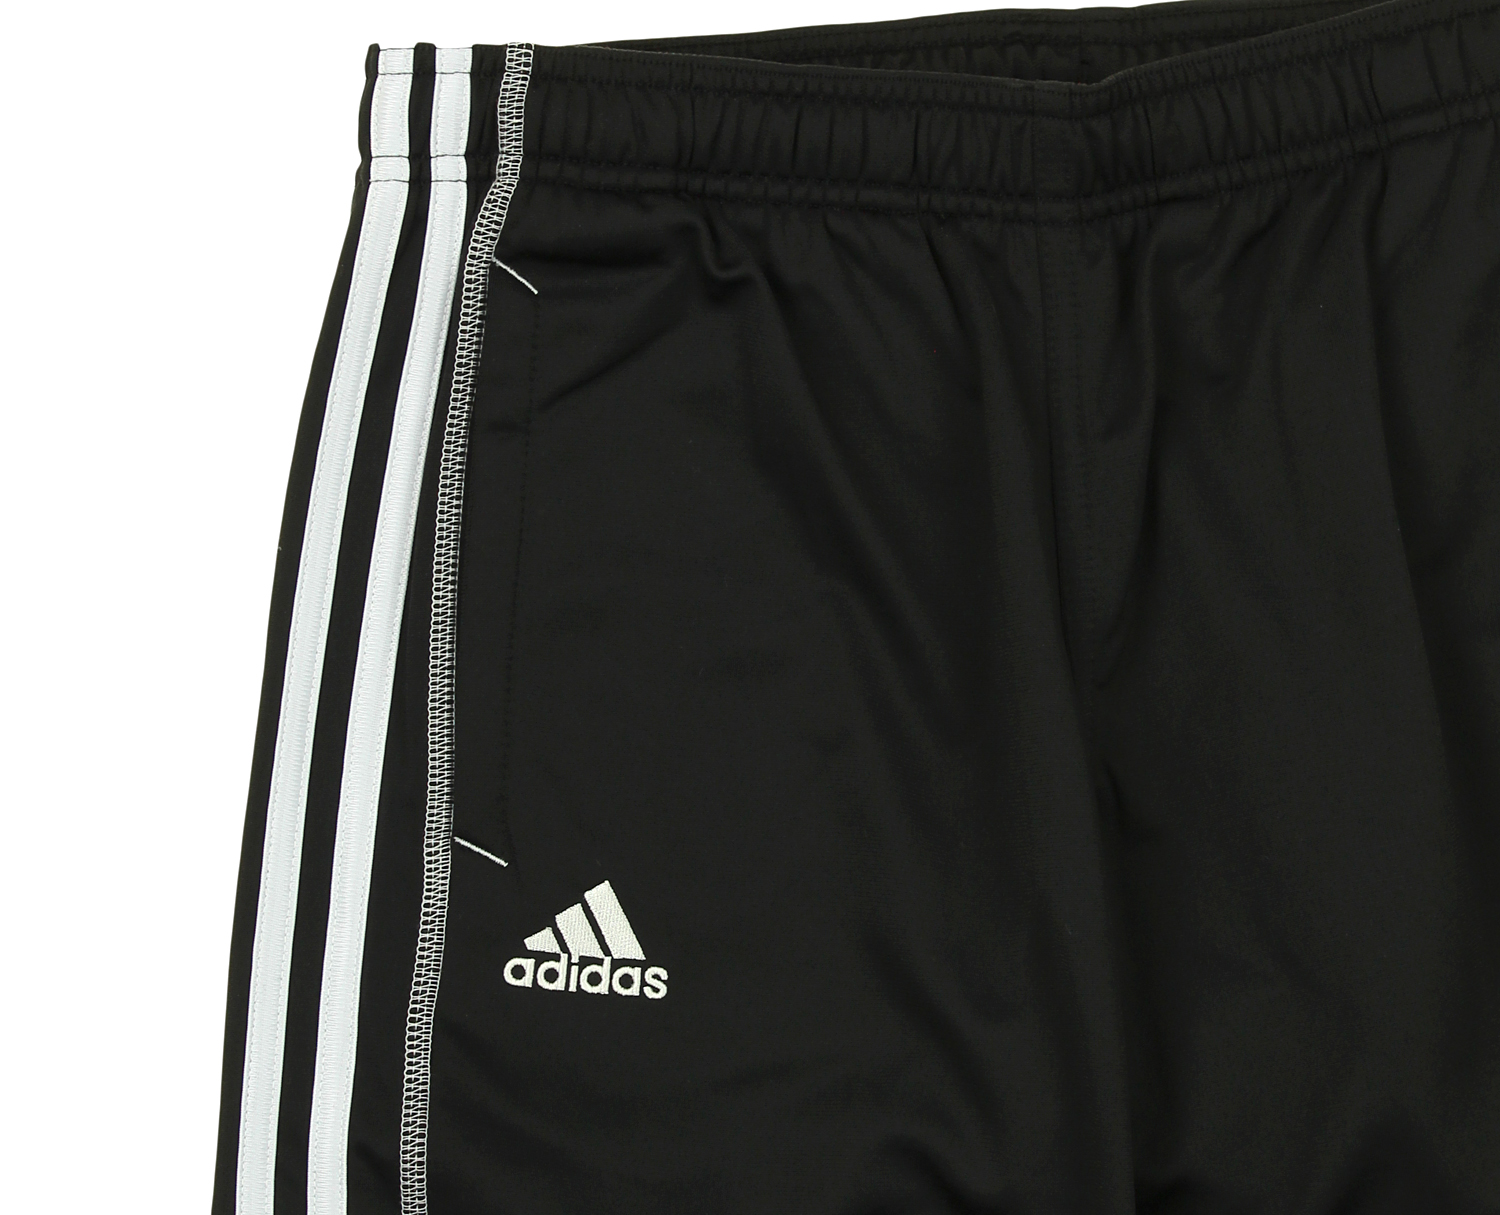 Adidas Women's Climalite Adiselect Pant, Black | eBay